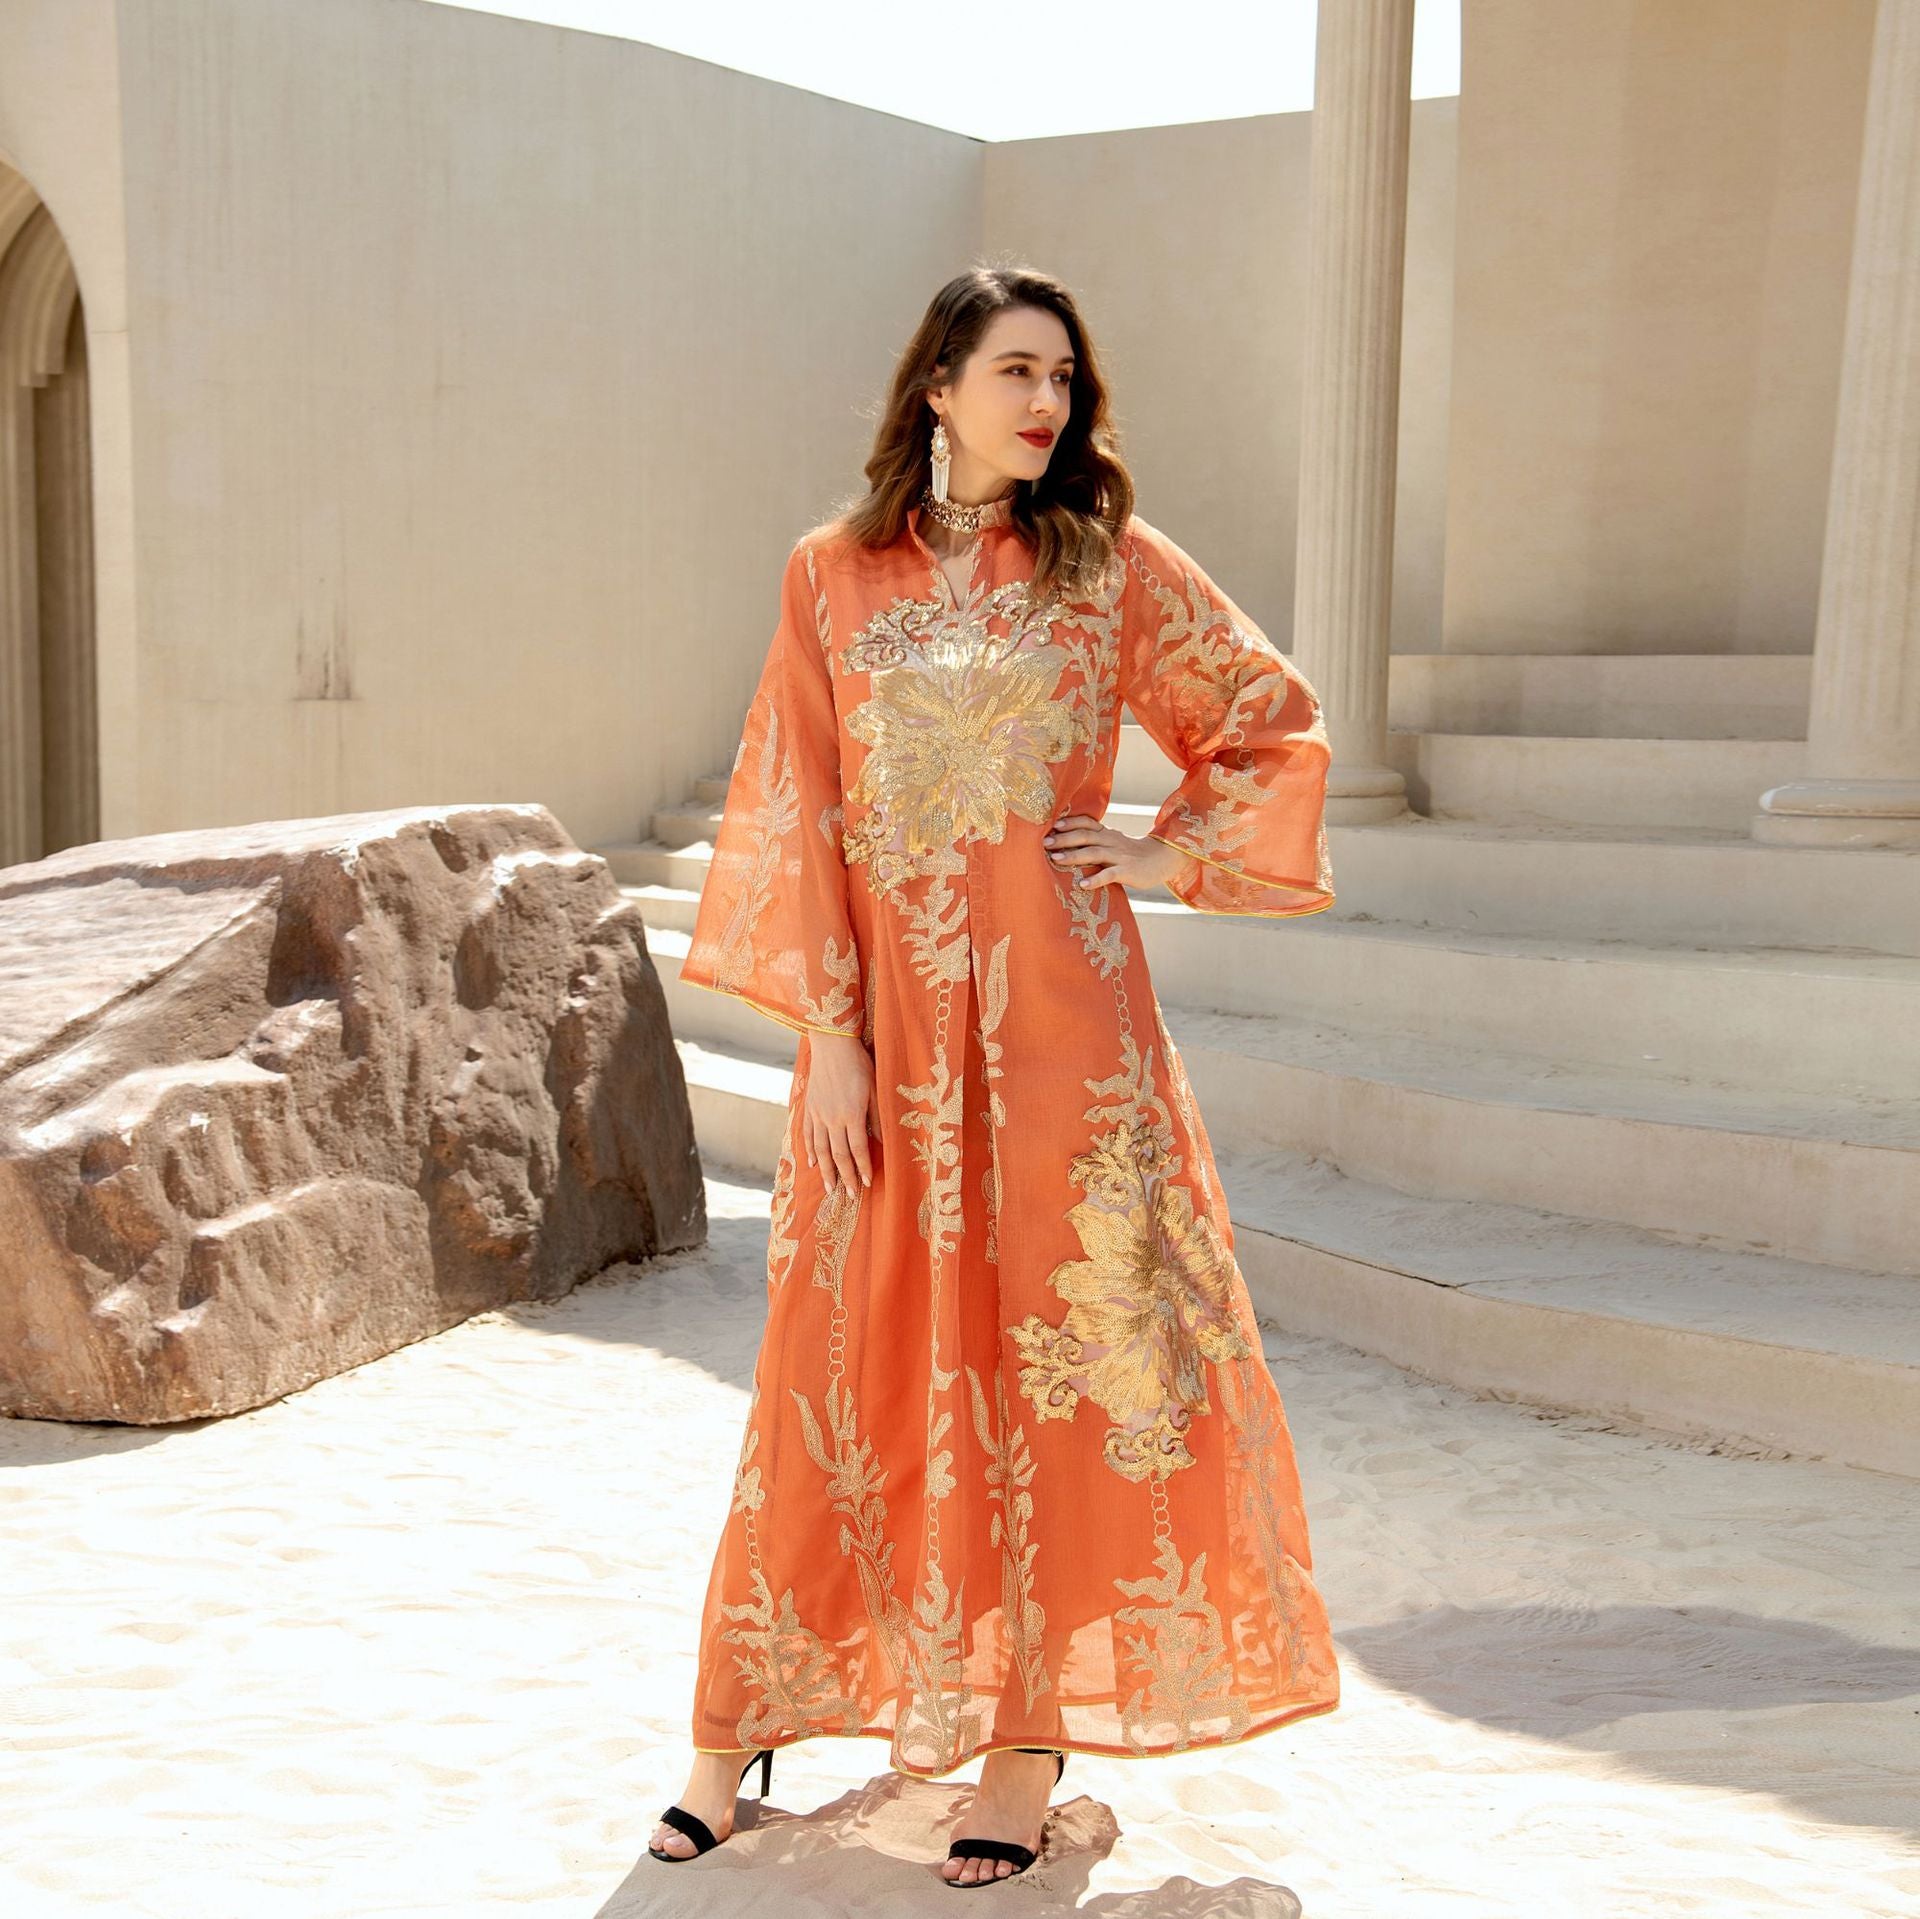 Middle East Fired Sequins Dress Light Luxury Celebrity Party Dress - Carvan Mart Ltd